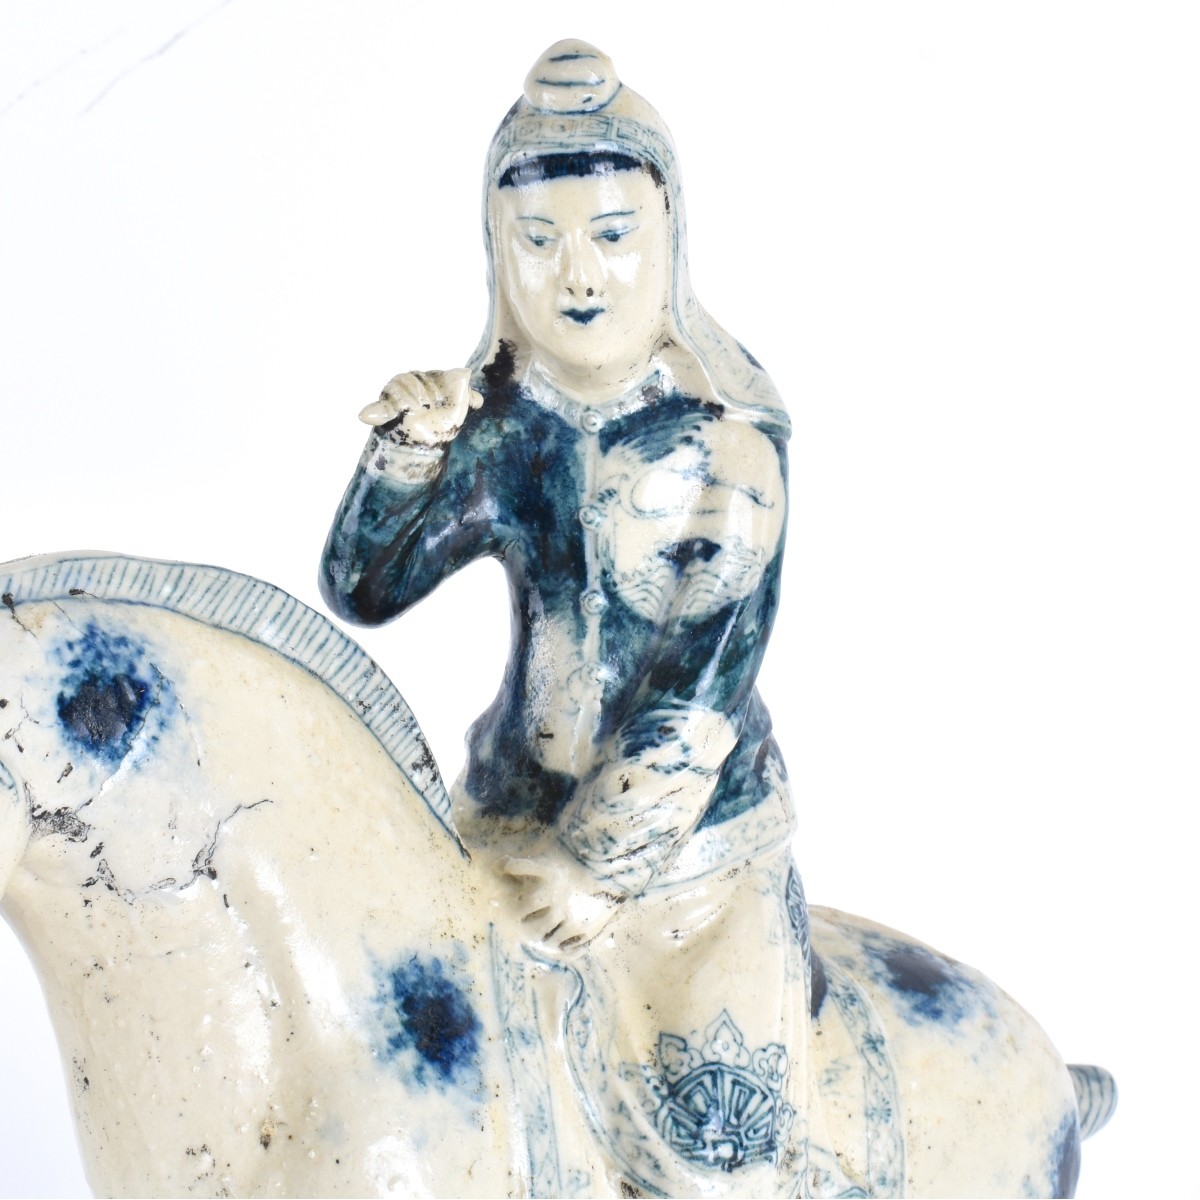 Chinese Female Rider on Horseback Figurine